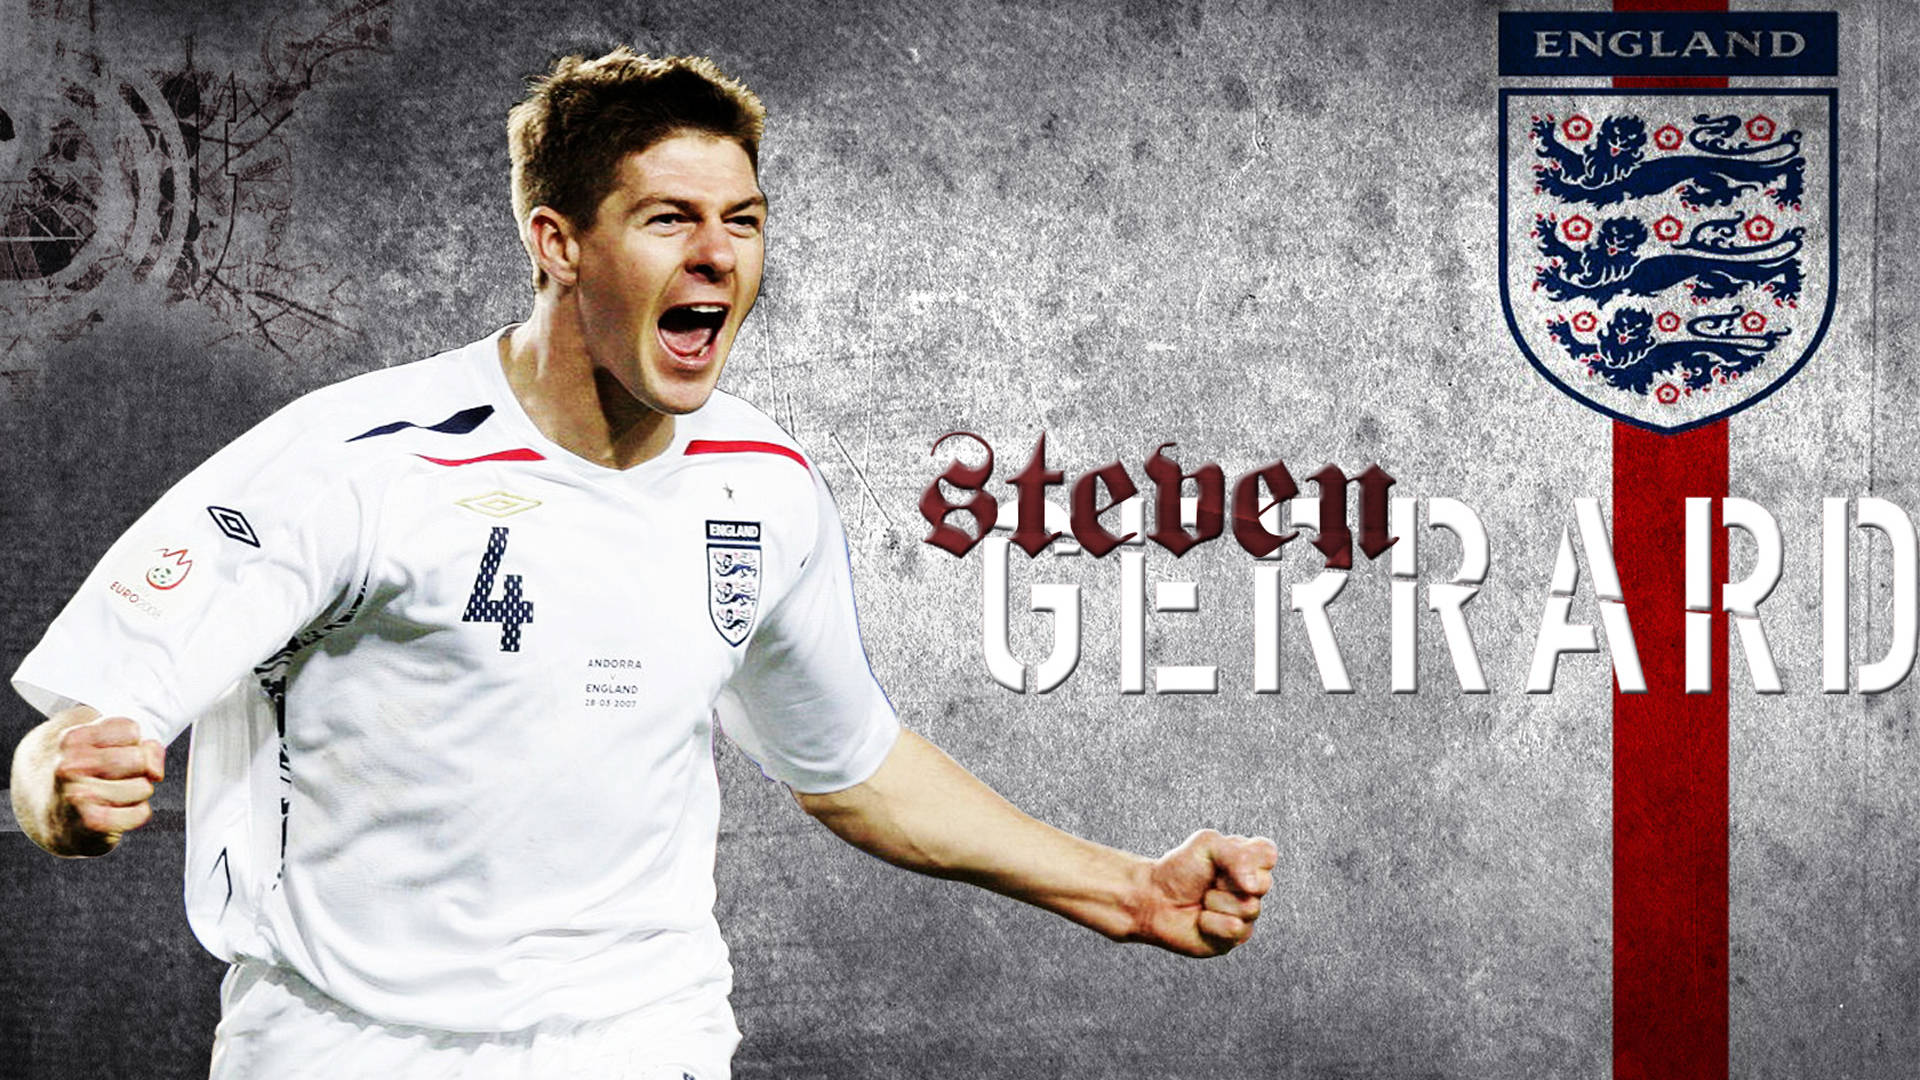 England Football Steven Gerrard Gray Background Background